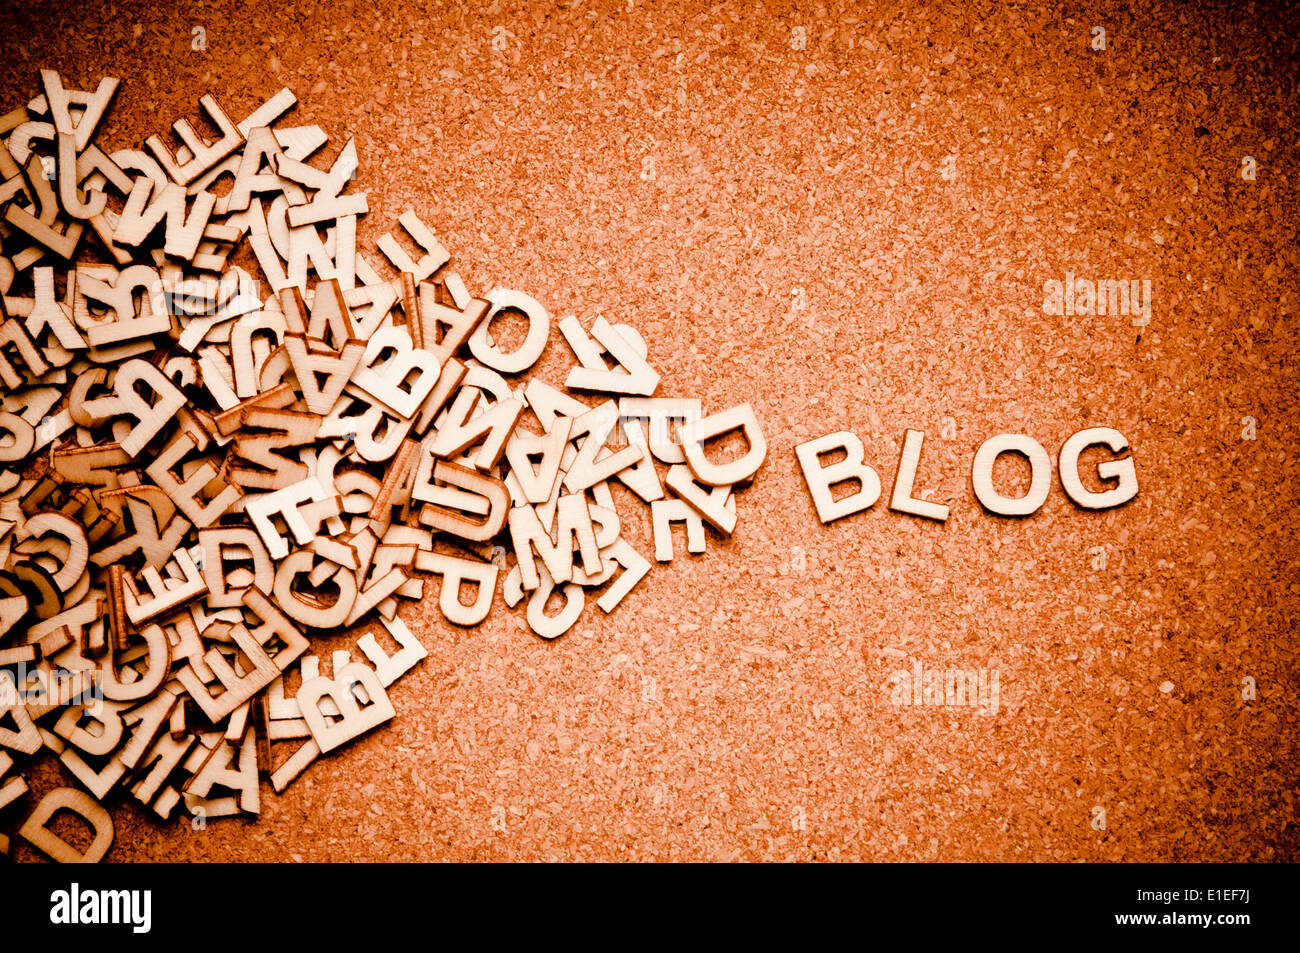 BLOG de palabras formadas a partir de letras de madera dispersos - blog concepto Foto de stock